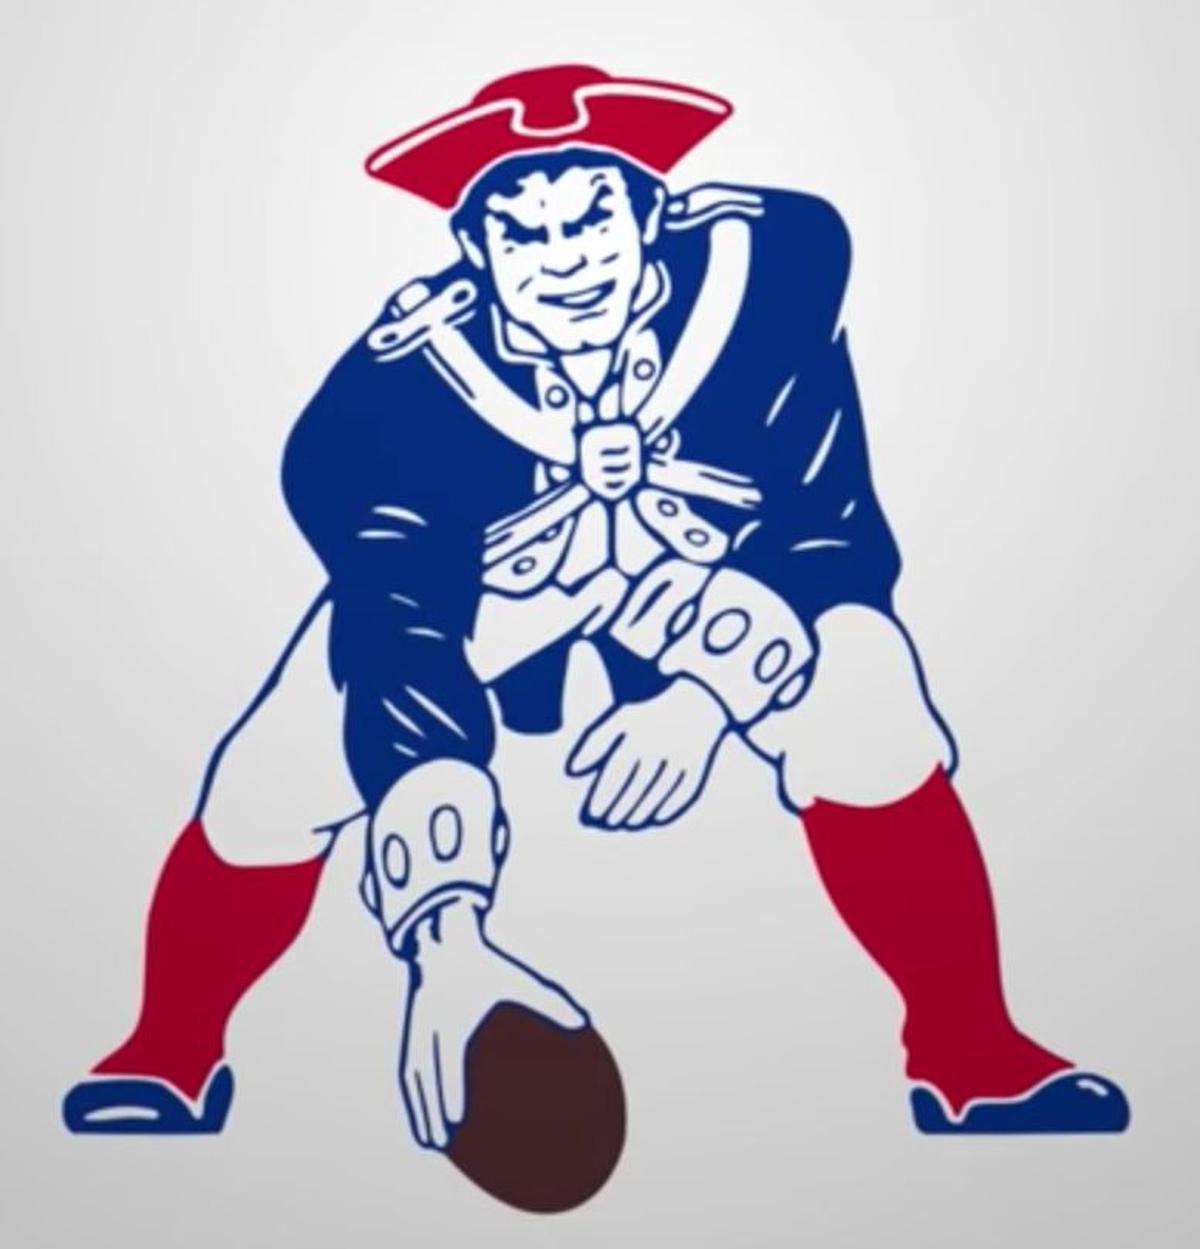 logo de los New England Patriots | 1972-1988
Imagen: @ShowmundialShow